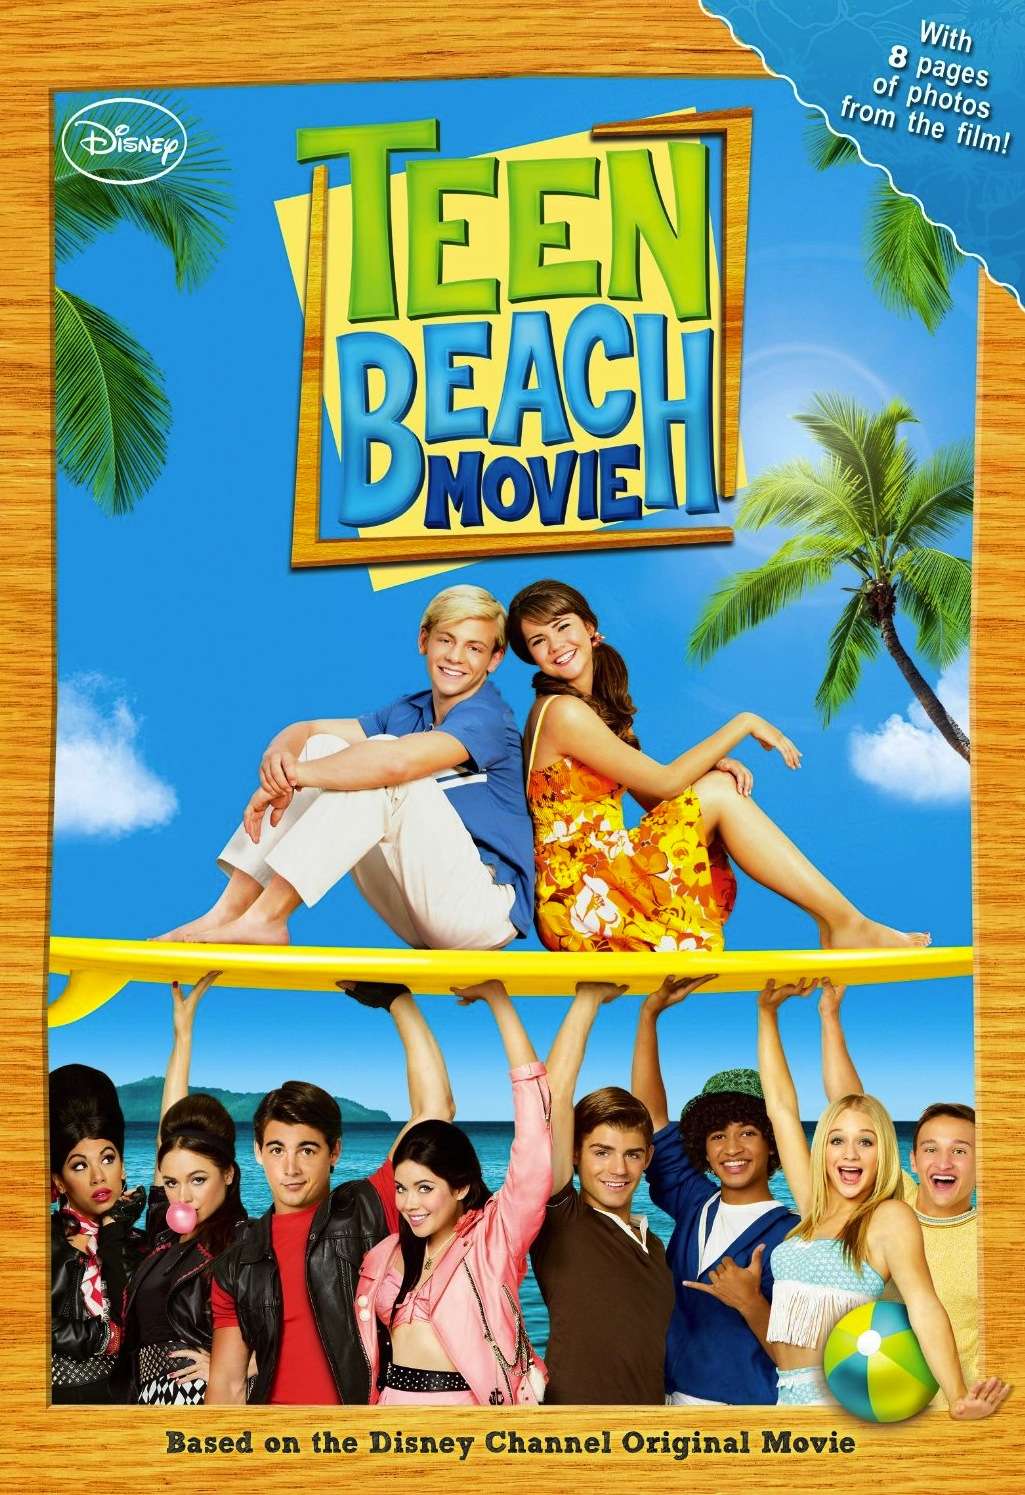 Teen Beach Movie - 2013 DVDRip XviD AC3 - Türkçe Altyazılı indir